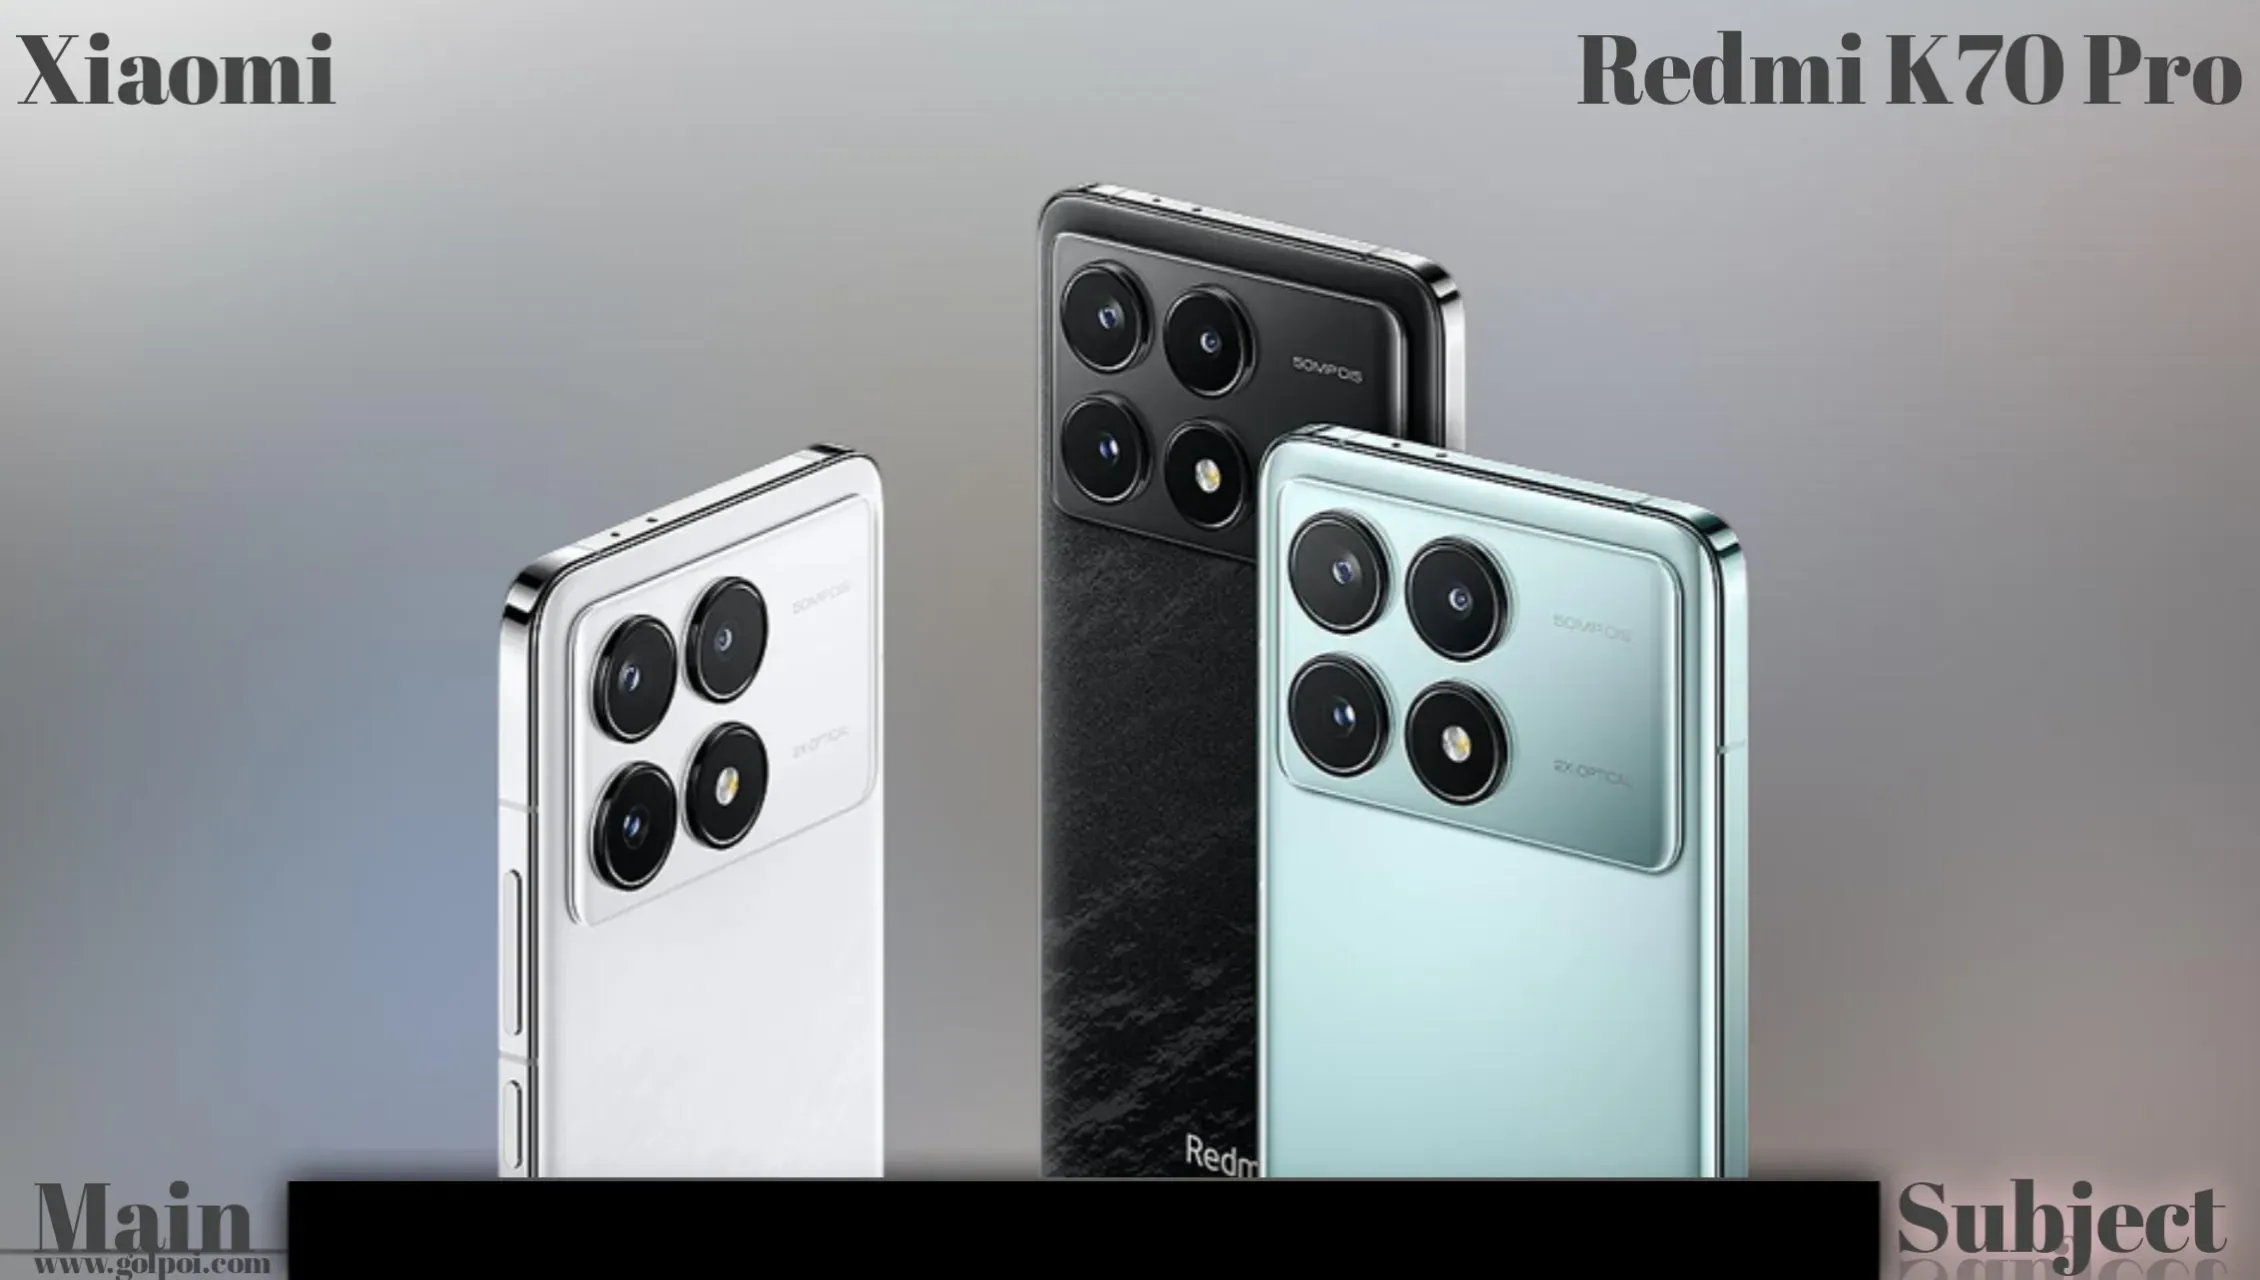 Xiaomi Redmi K70 Pro Price in Bangladesh